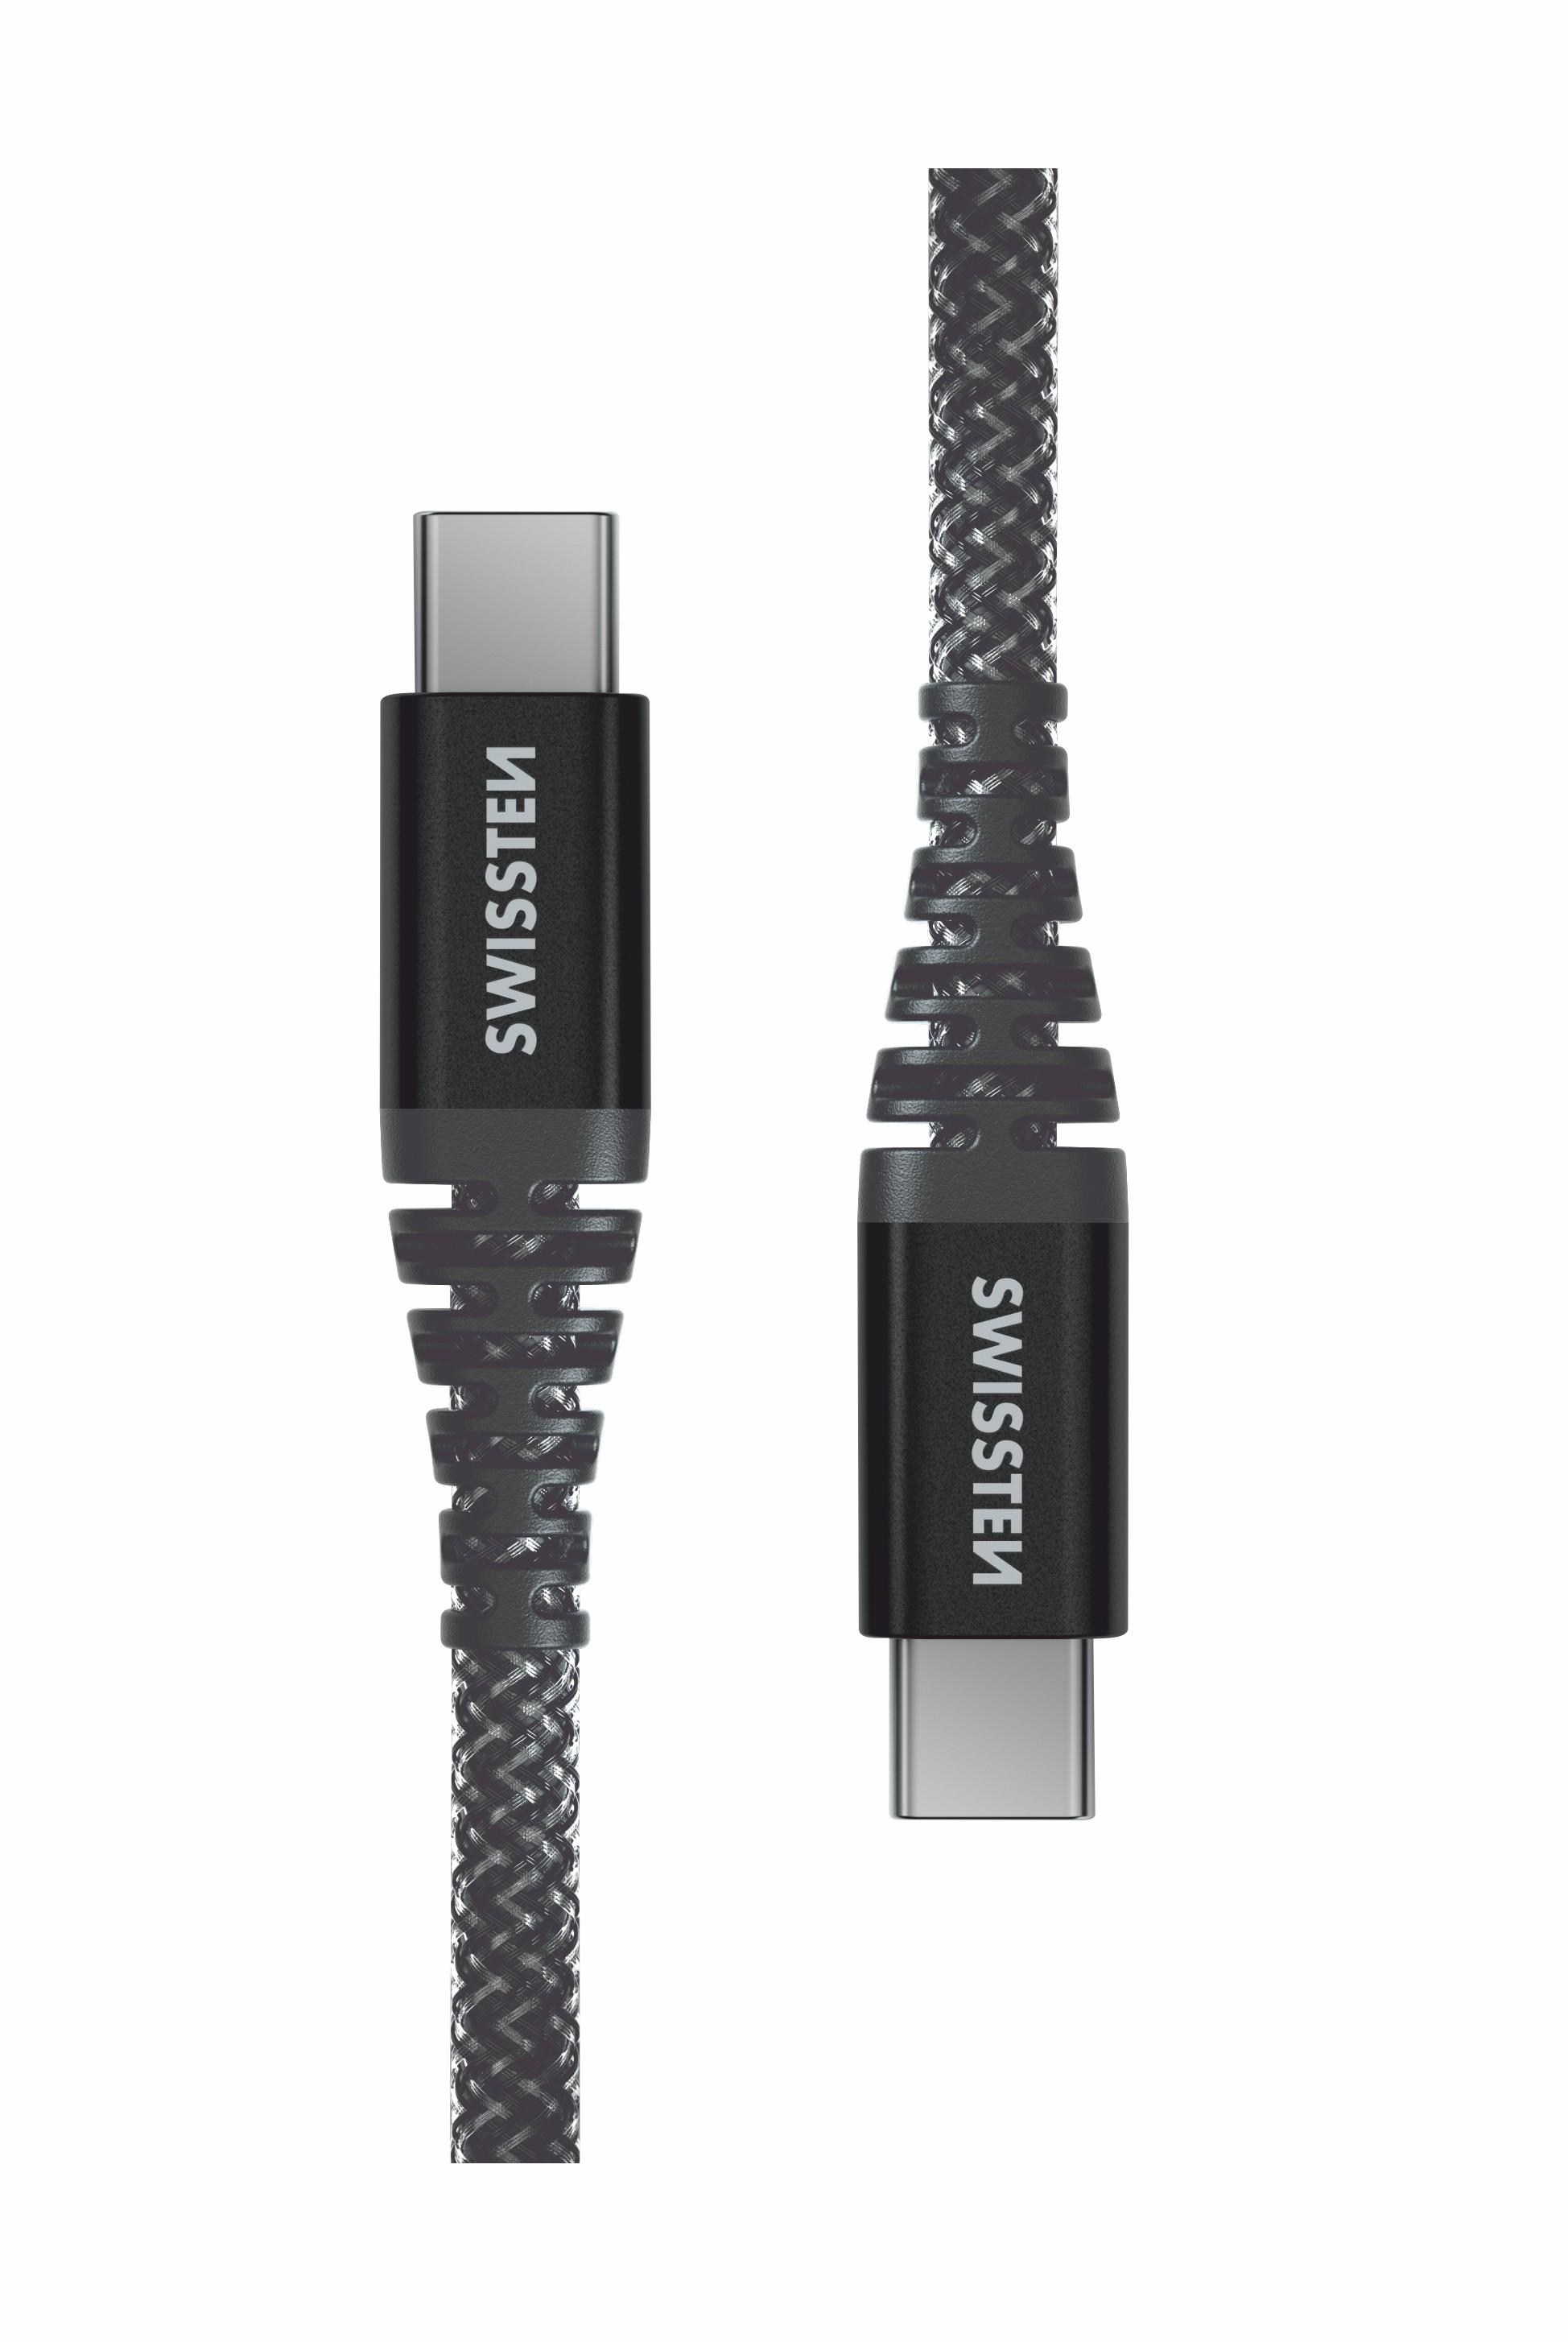 Swissten kevlarový datový kabel USB-C / USB-C 1.5 M antracitový